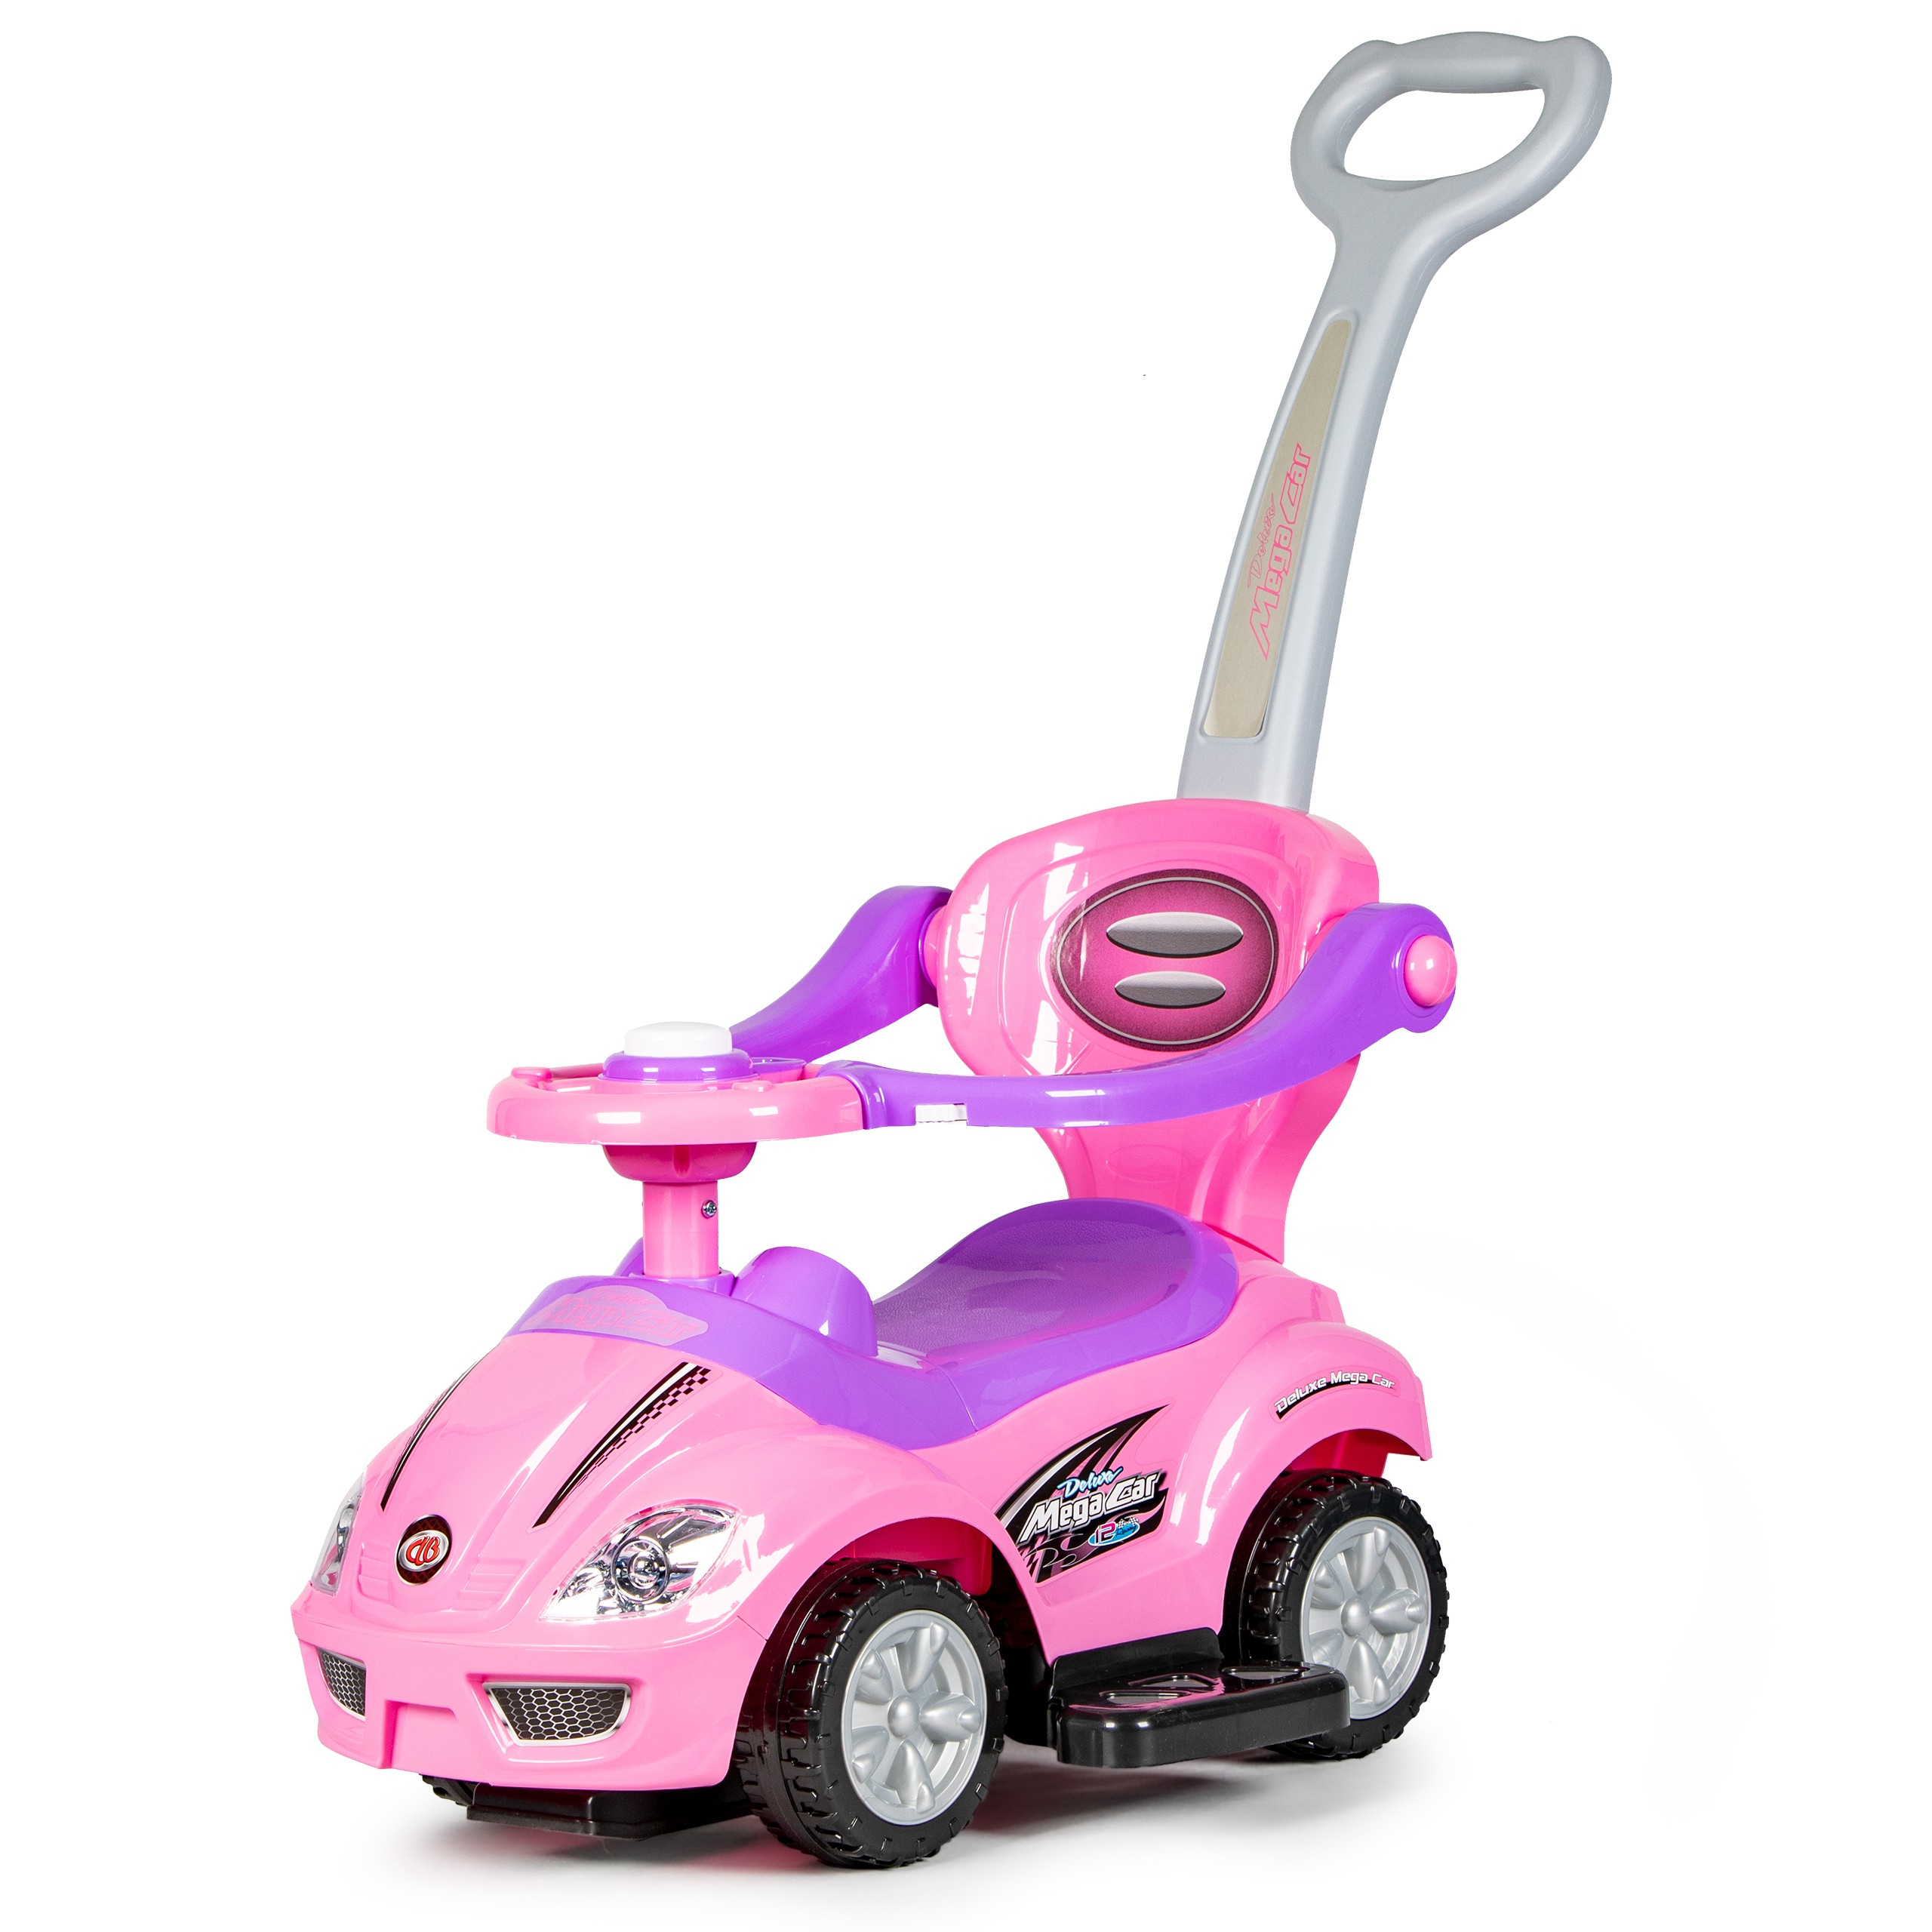 3in1 Deluxe pushher ride roz